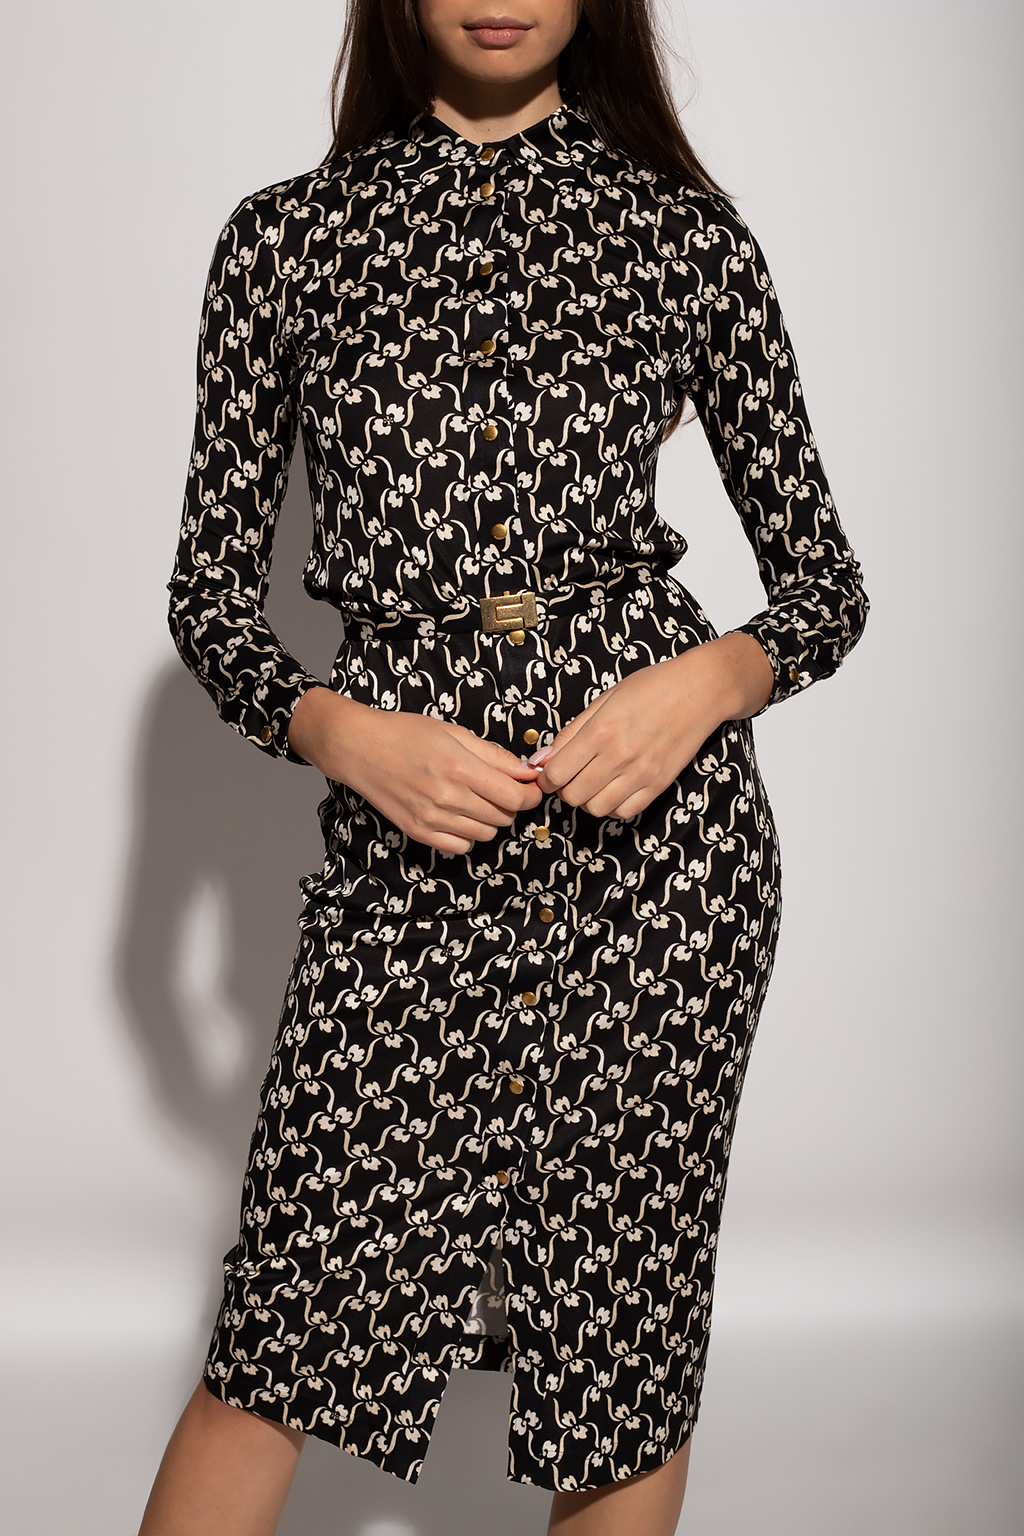 voz brown dress | Silk dress Tory Burch - IetpShops Australia